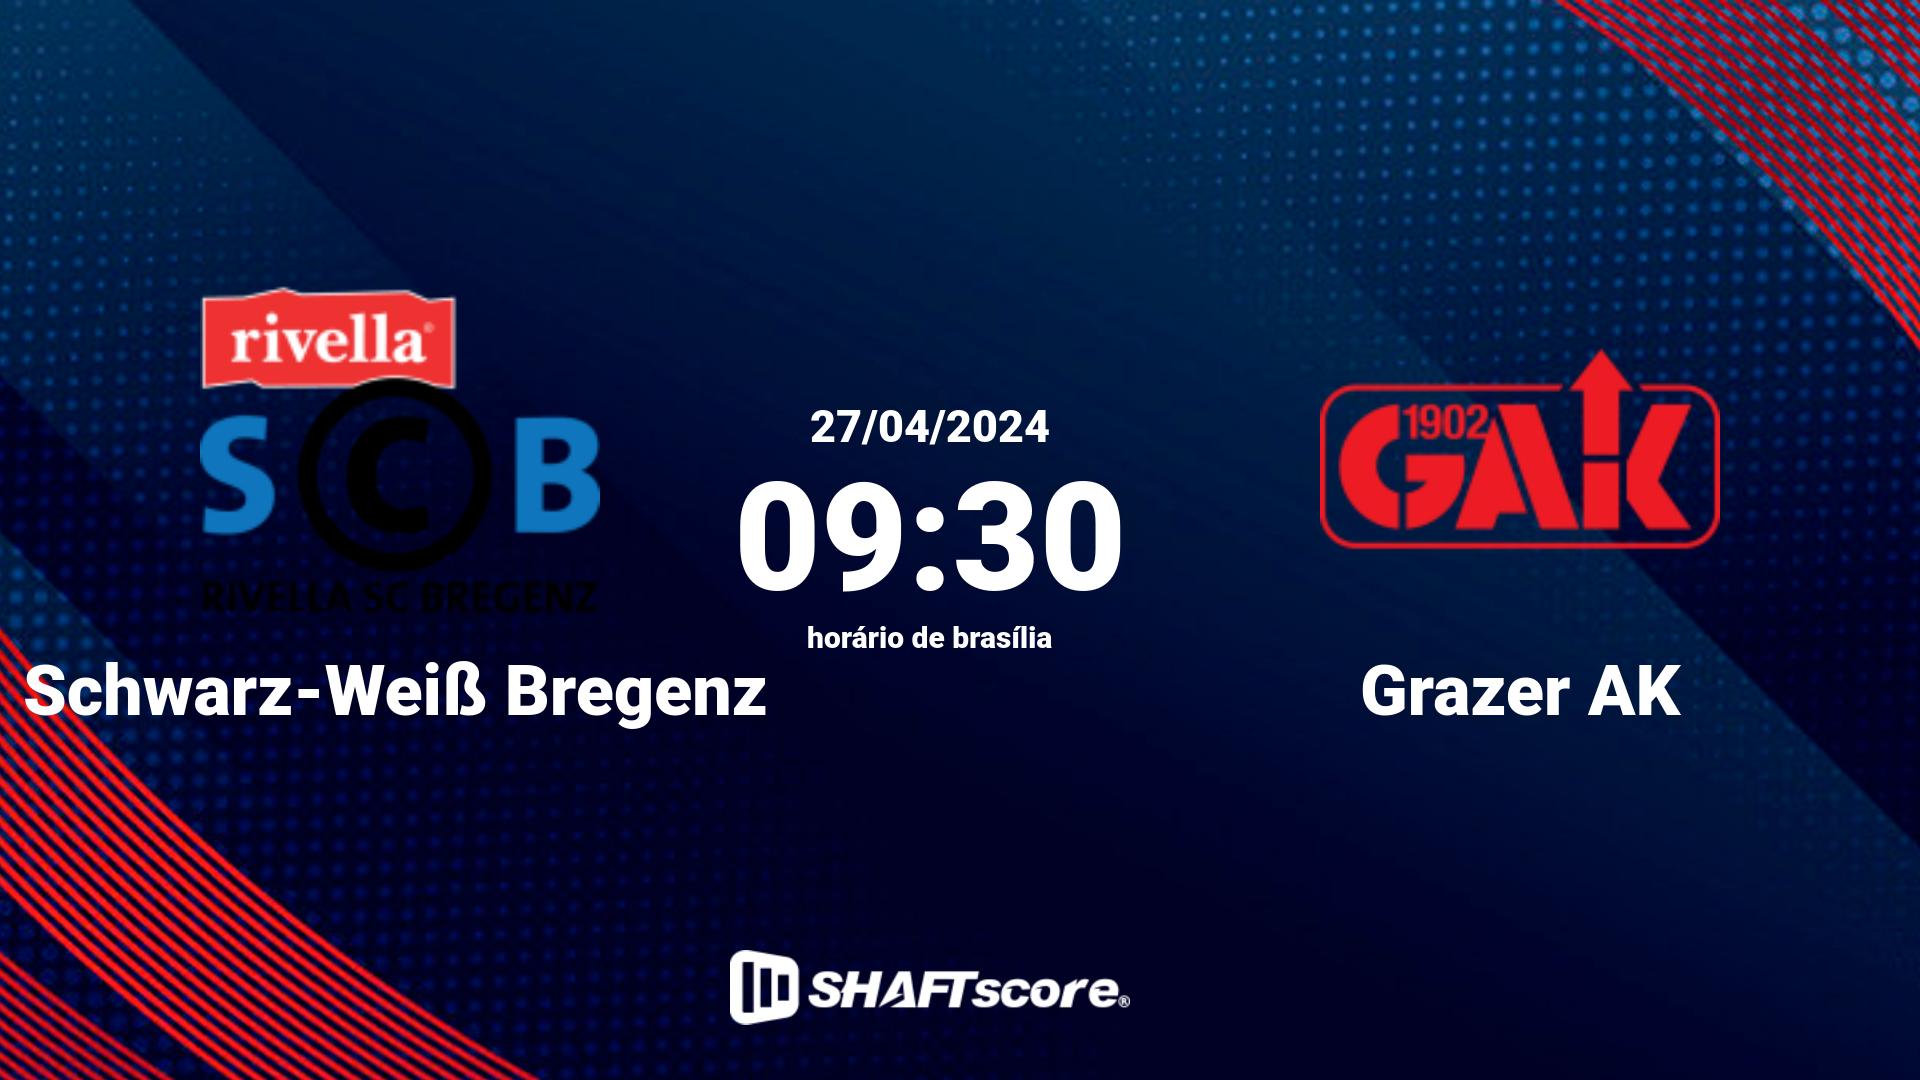 Estatísticas do jogo Schwarz-Weiß Bregenz vs Grazer AK 27.04 09:30